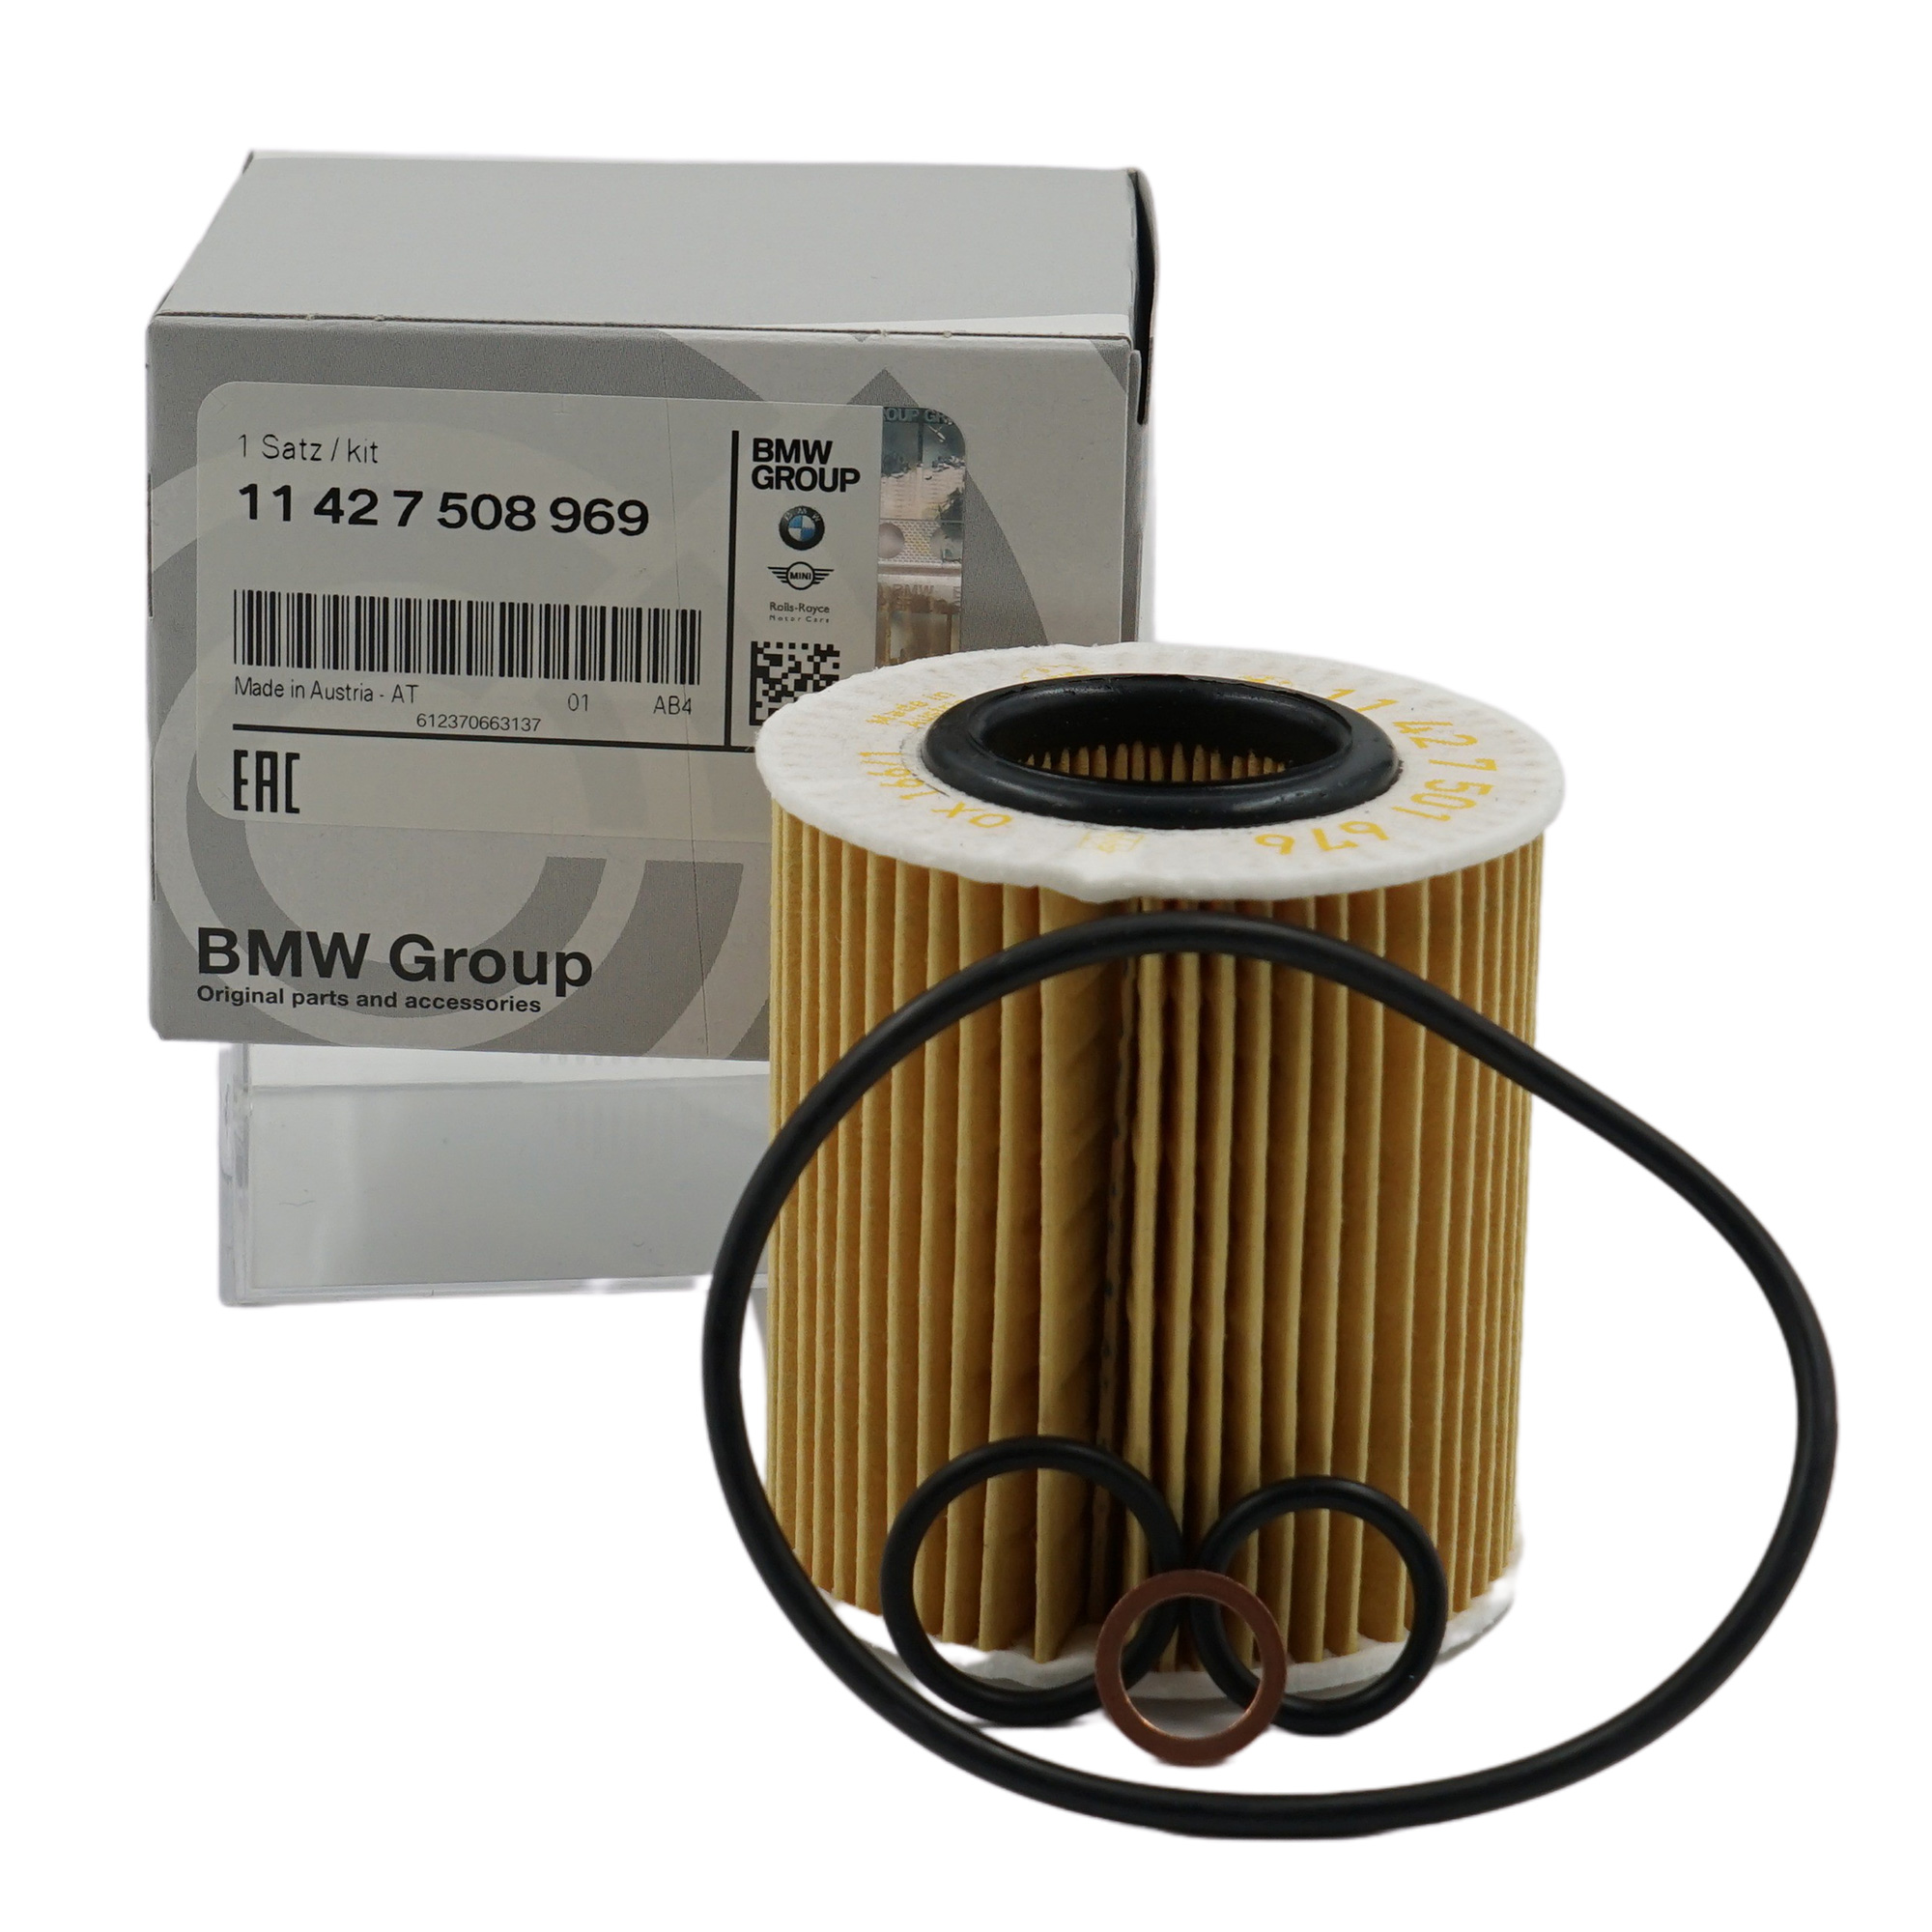 Original BMW Set oil-filter element (11427508969) | HUBAUER-Shop.de